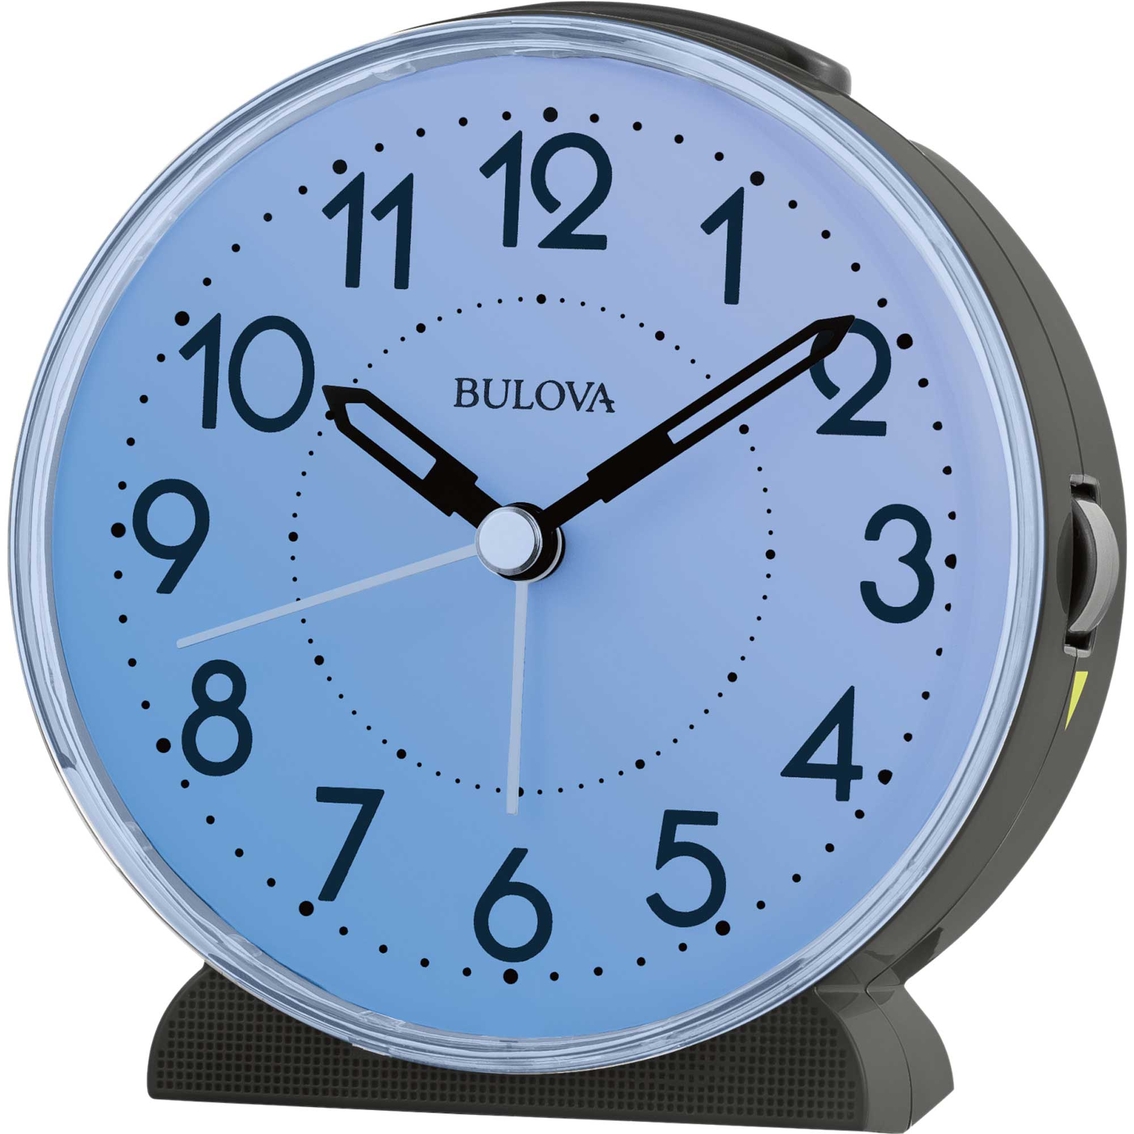 Bulova Oracle Alarm Clock B1868 - Image 2 of 5